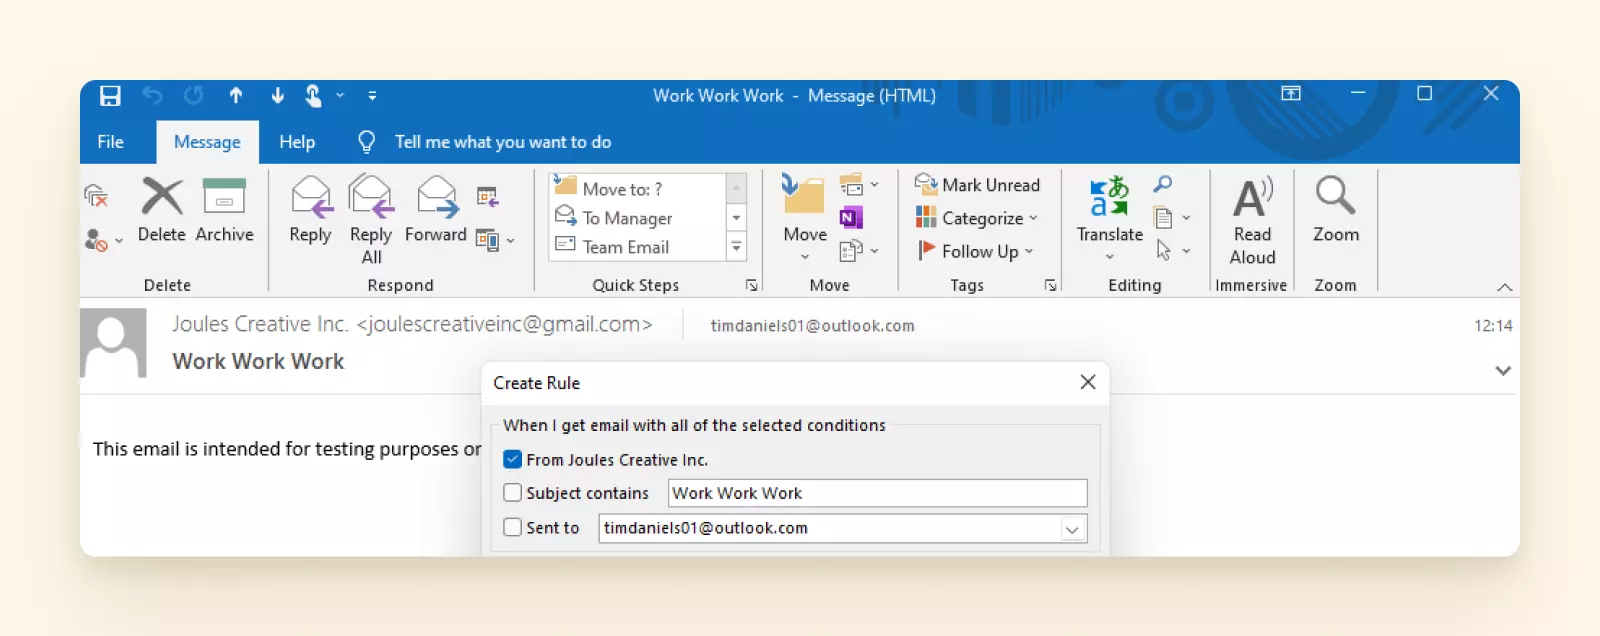 Create Rule window in the desktop Outlook version